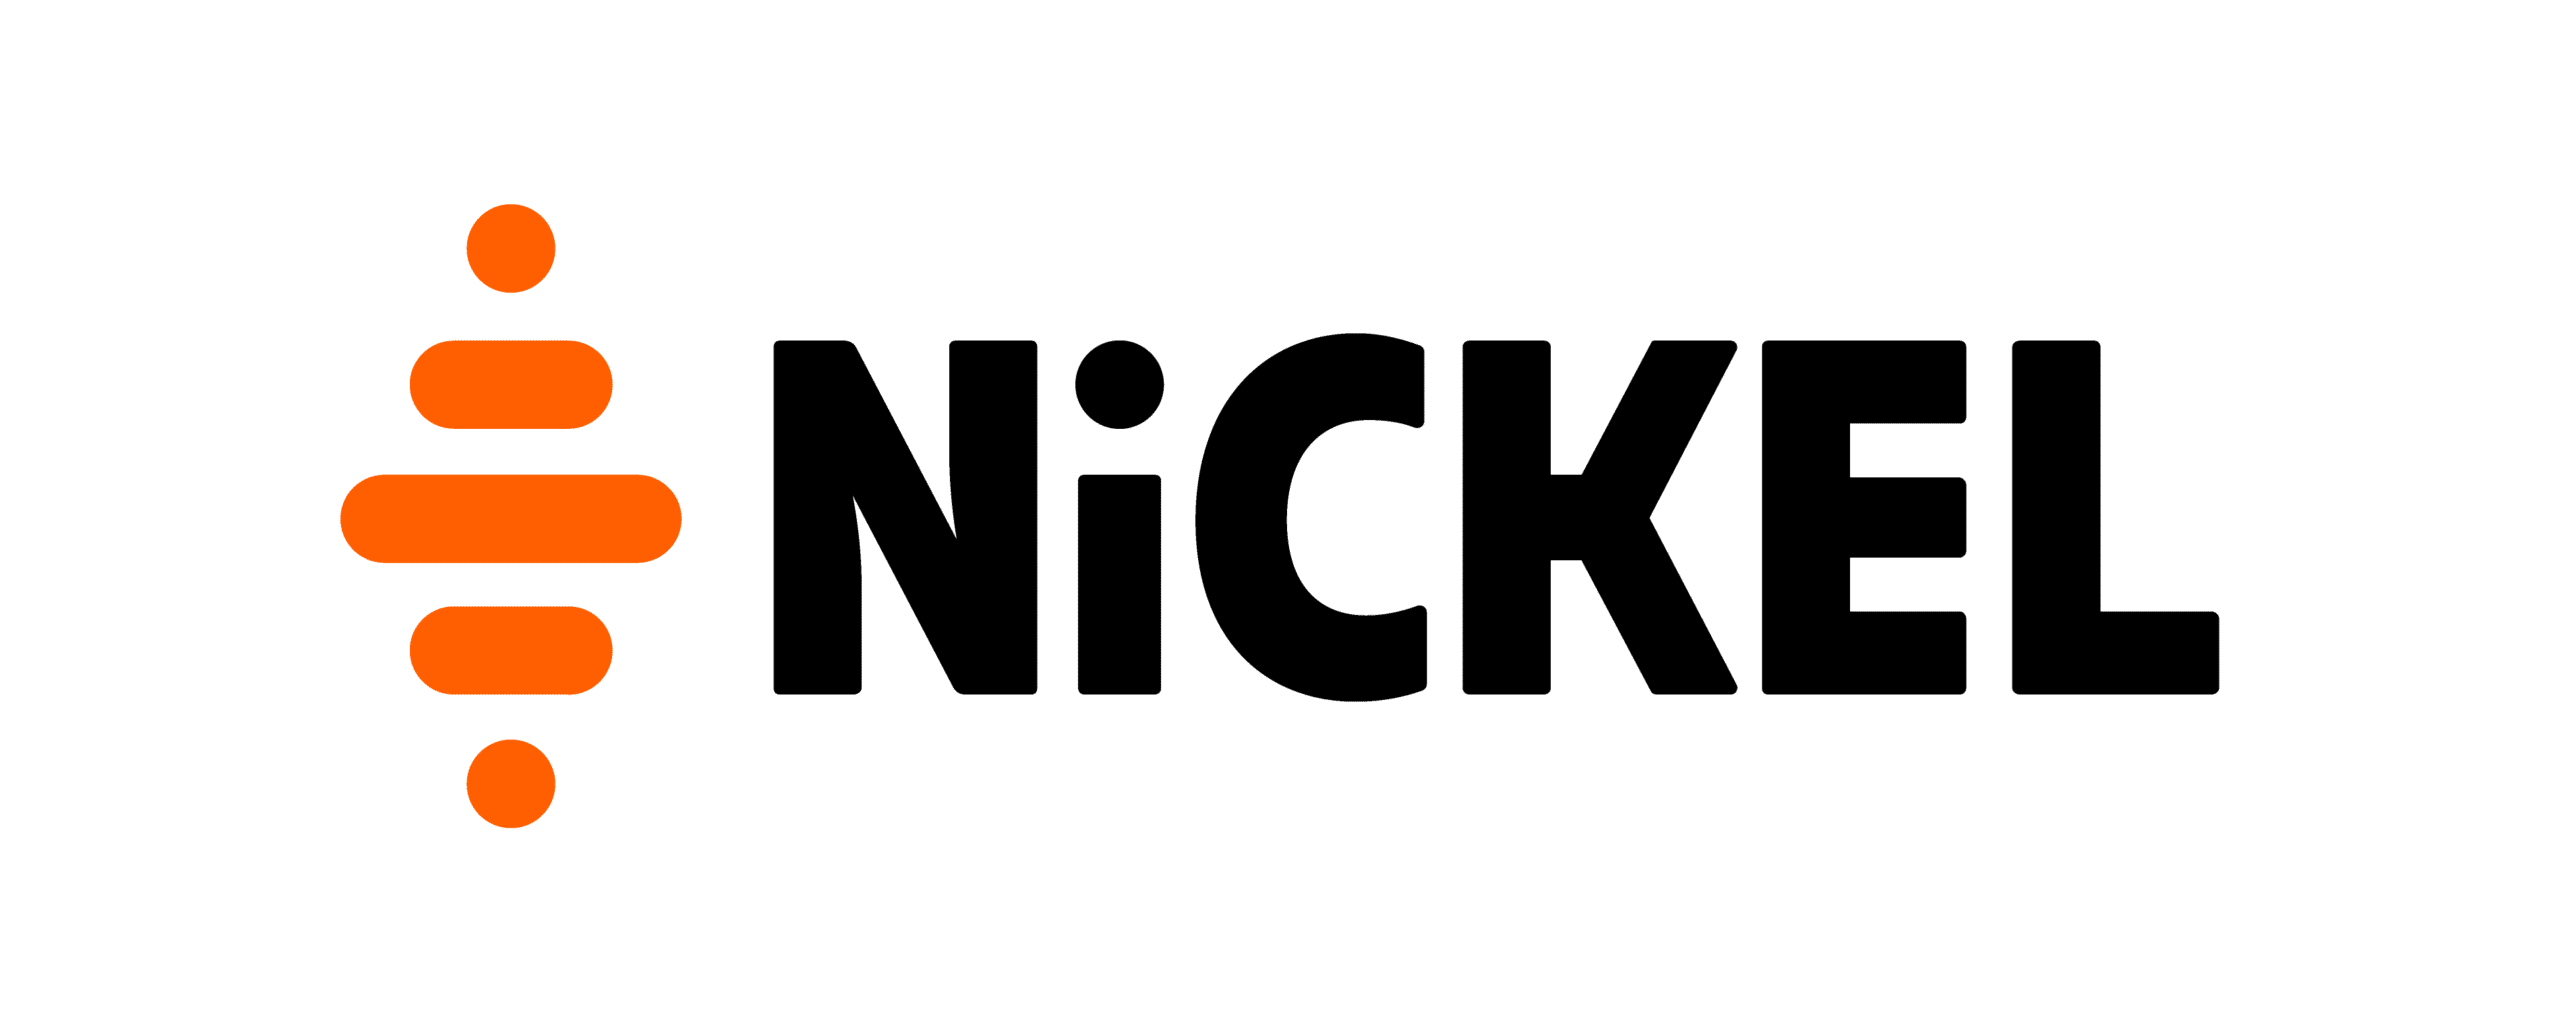 Nickel – Imprimer son RIB